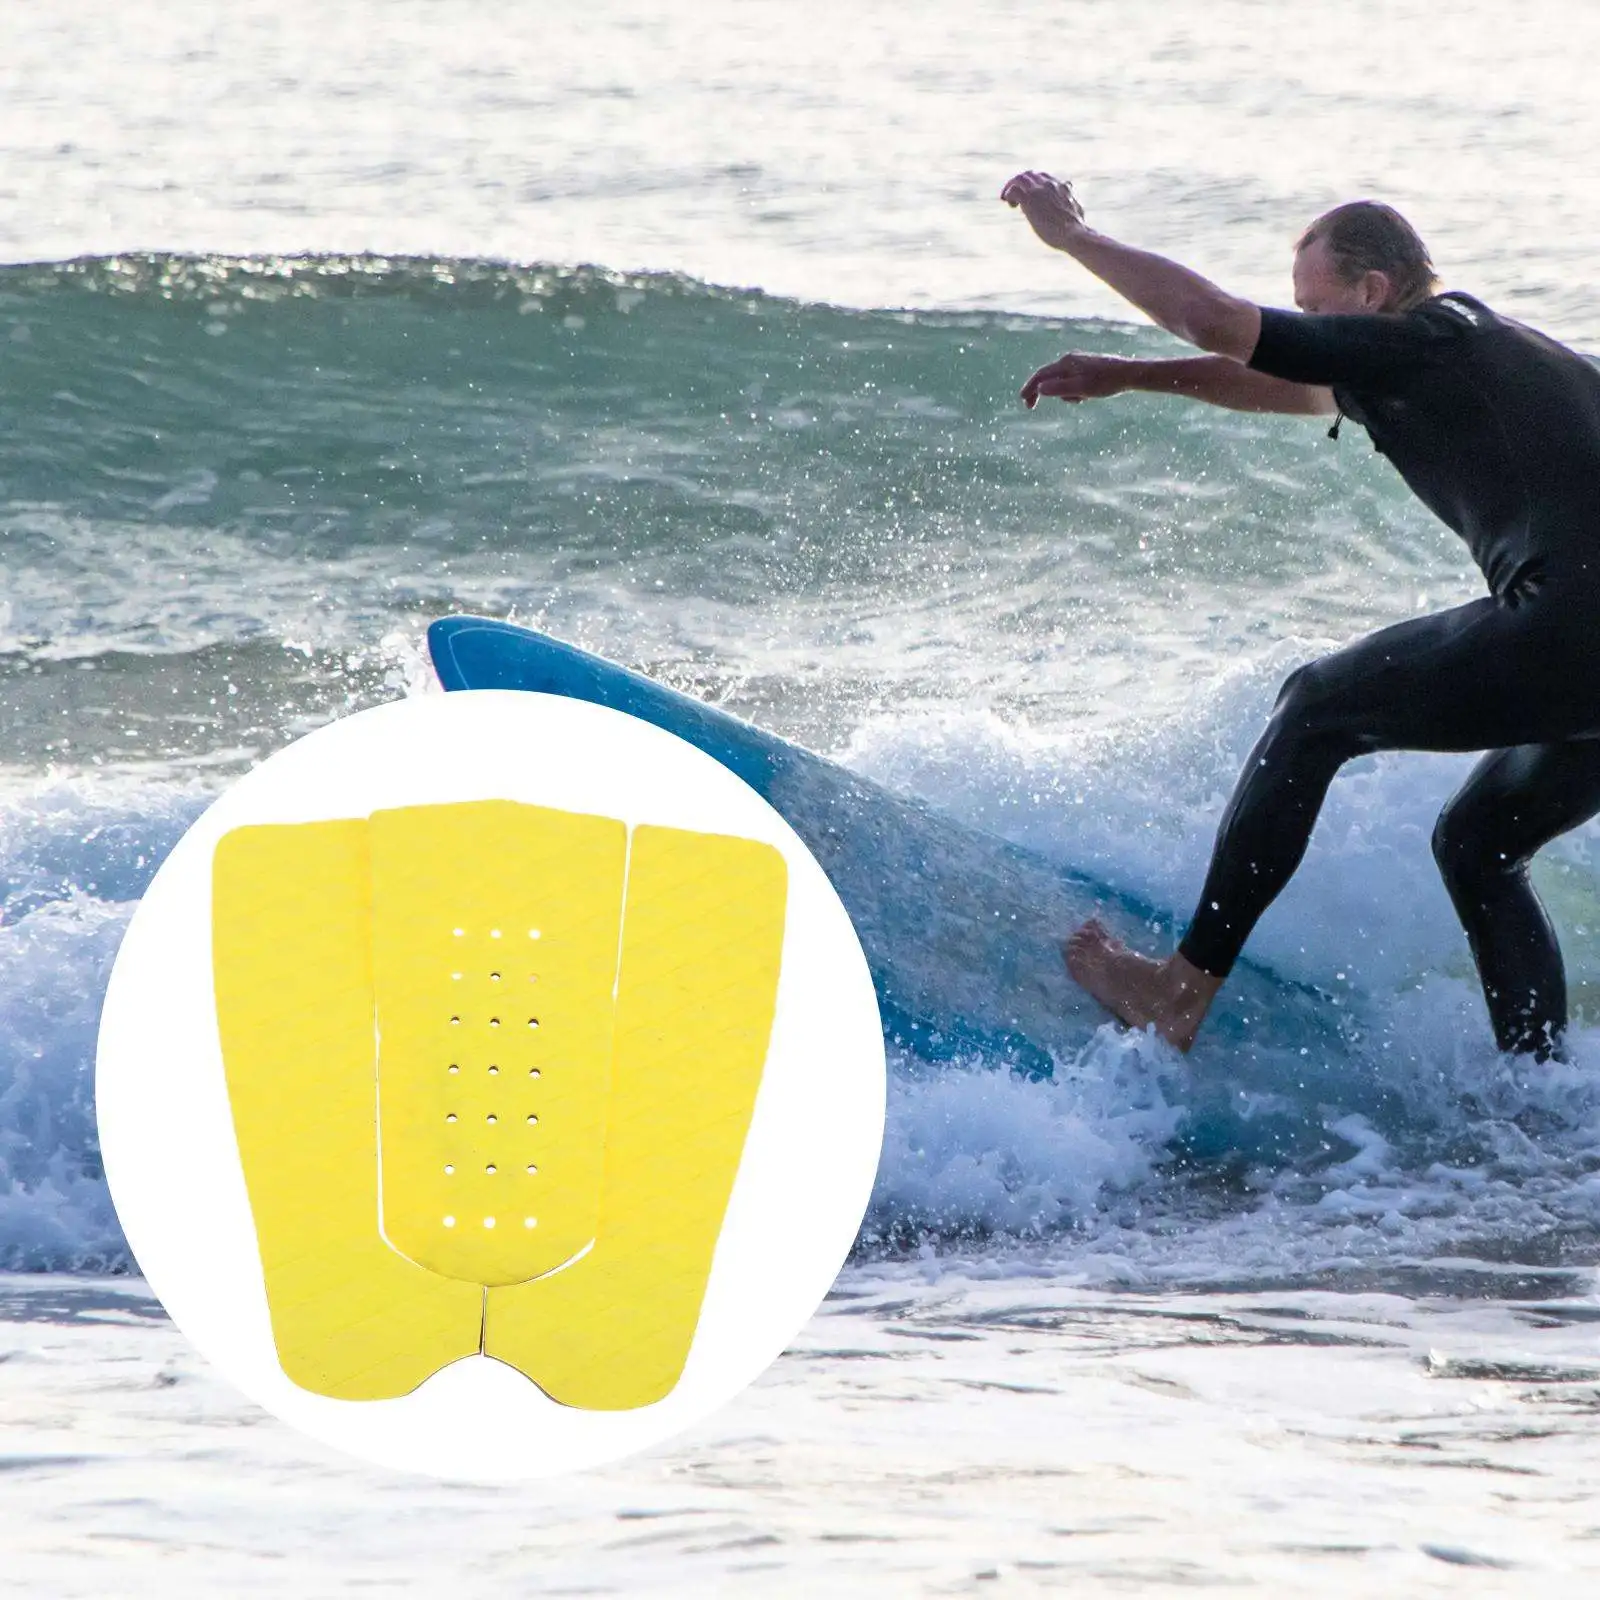 3x EVA Surfboard Traction Pad Anti-slip Longboard Skimboard Grip Surf Deck Tail Pads Water Sports Accessories